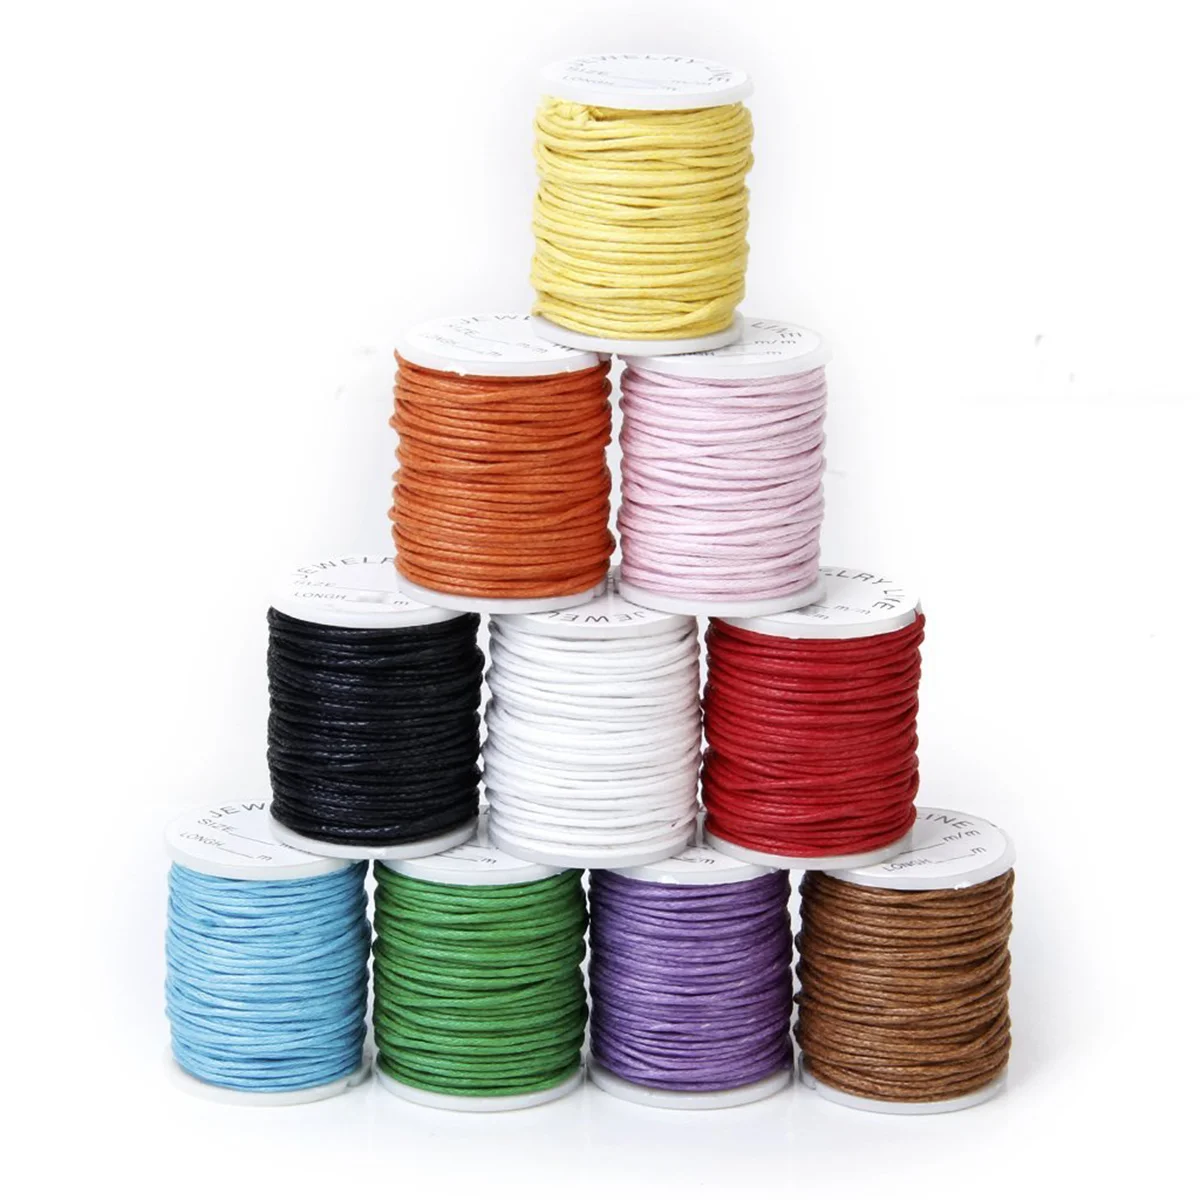 

10 Rolls 1mm Waxed Nylon Hand Knitting Cord String Beading Thread (Random Color)